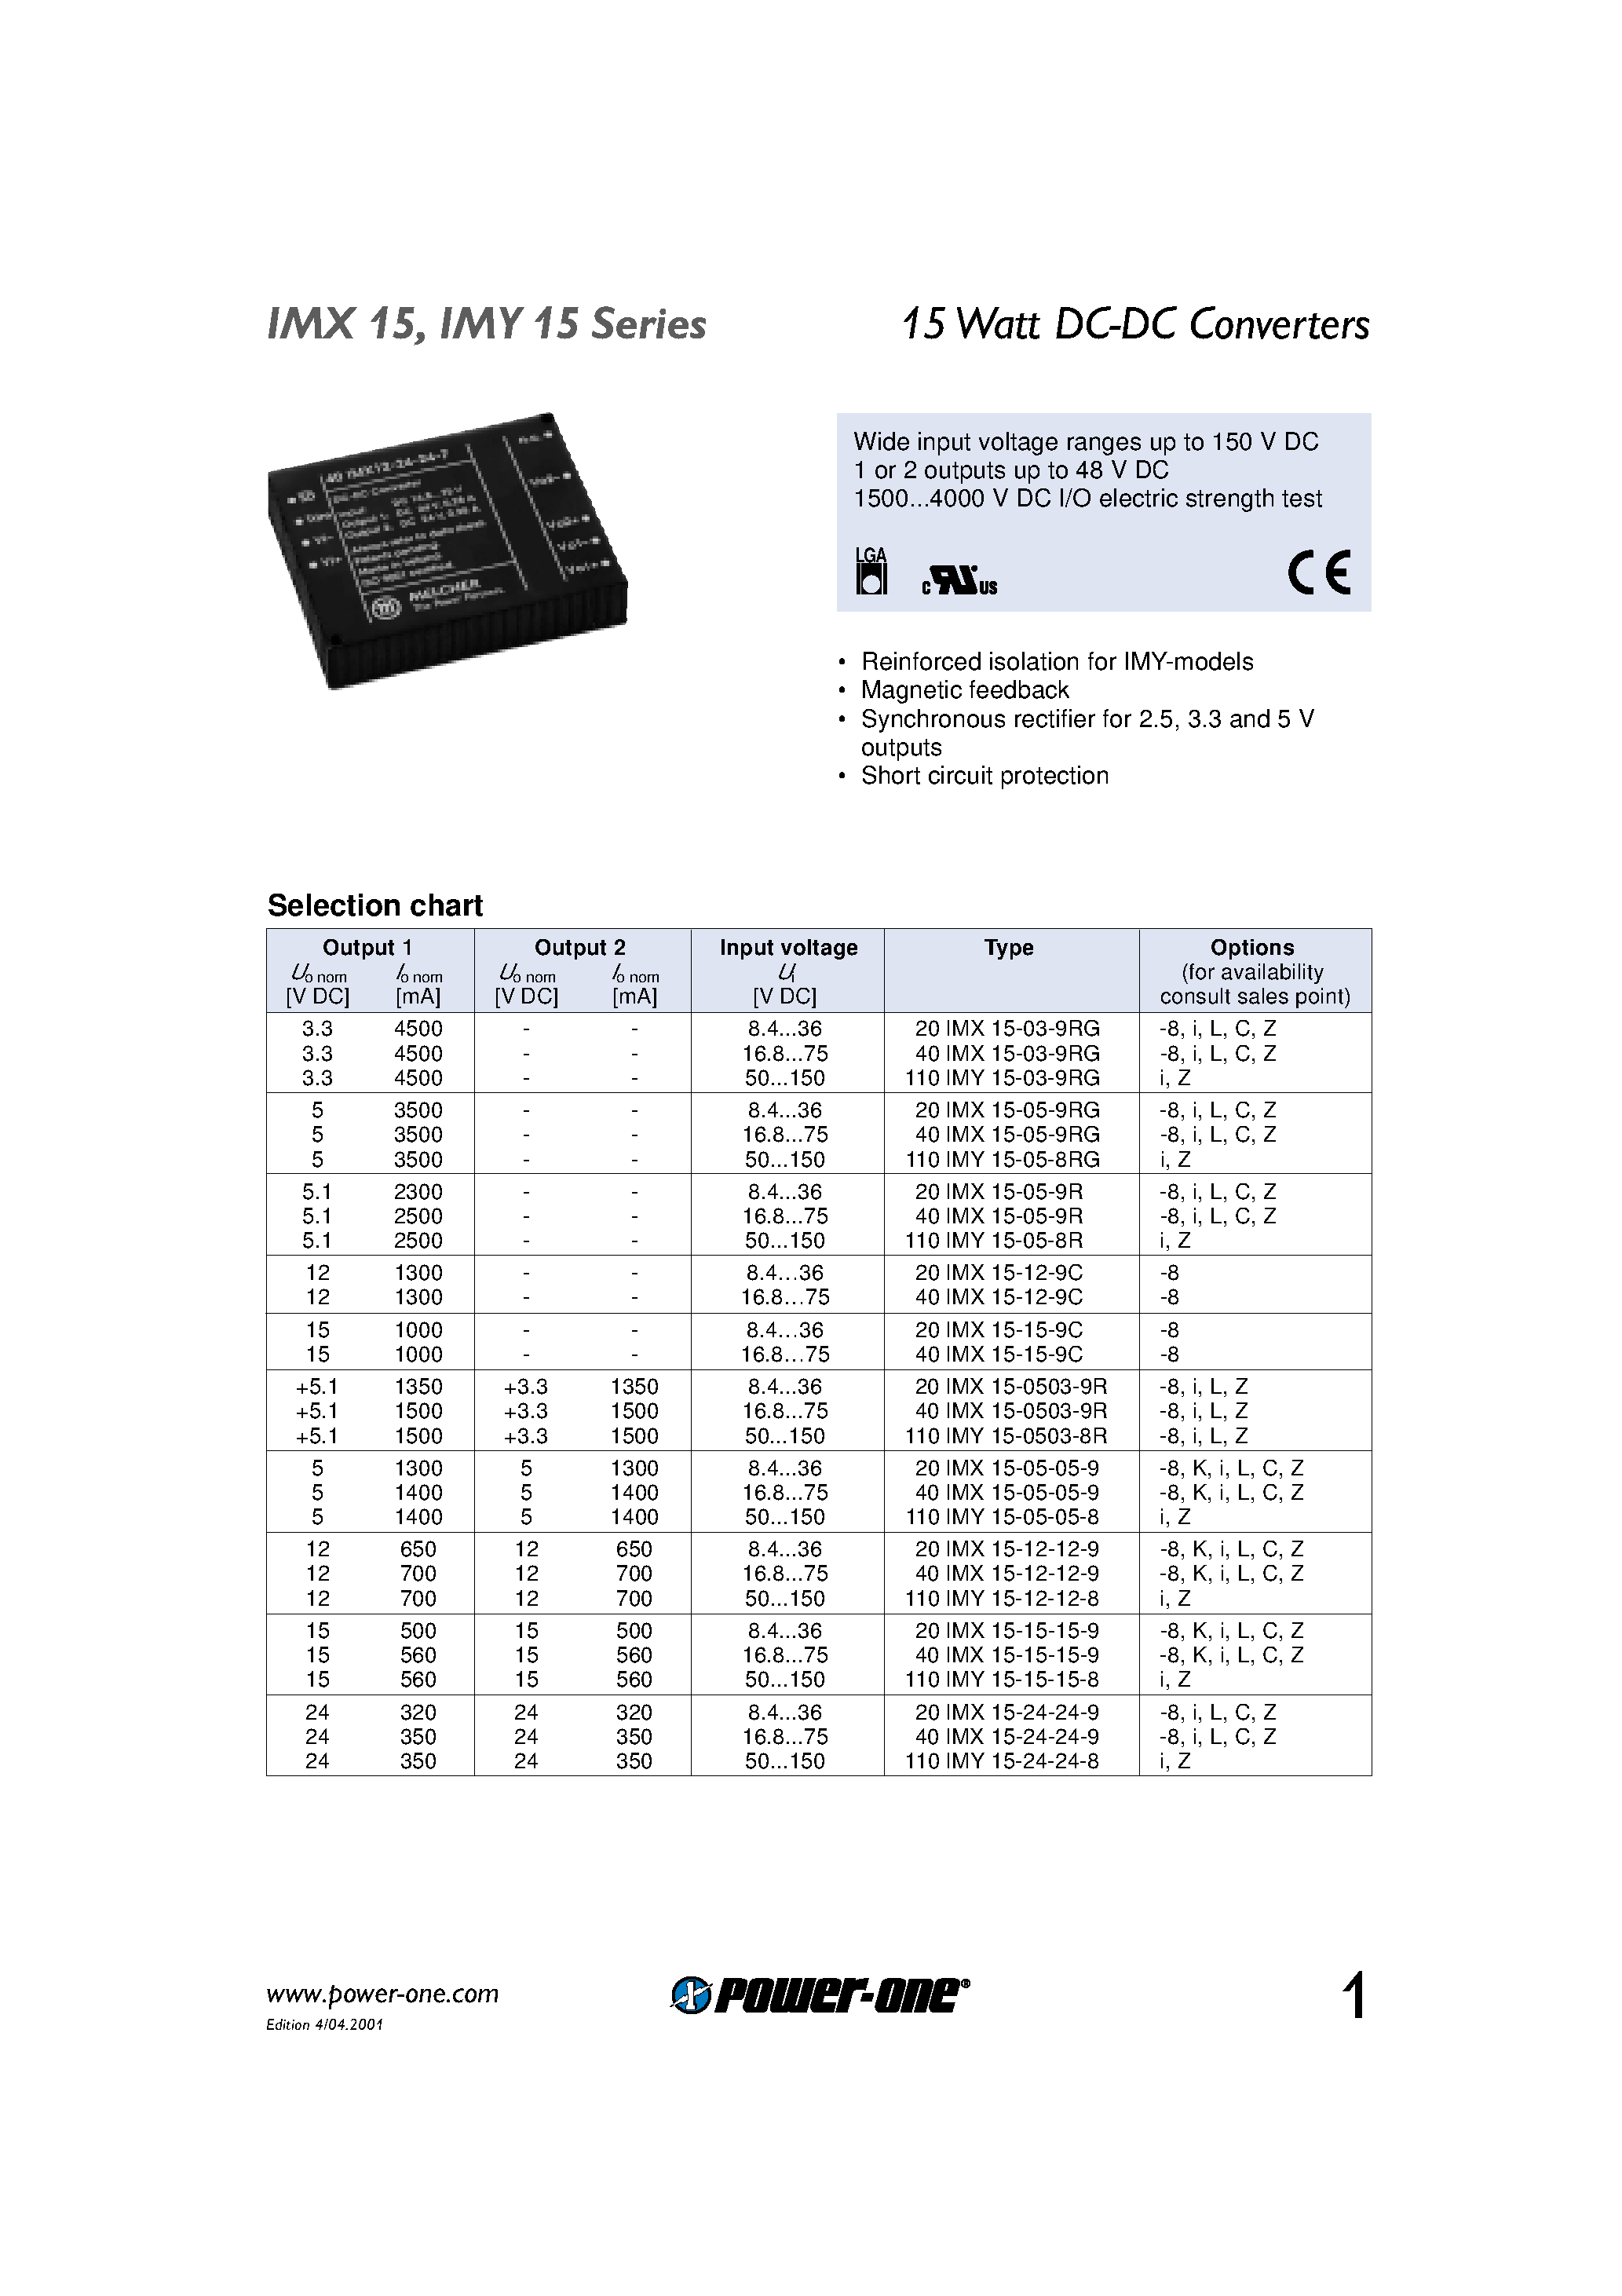 Datasheet 40IMX15-12-12-9 - 15 Watt DC-DC Converters page 1